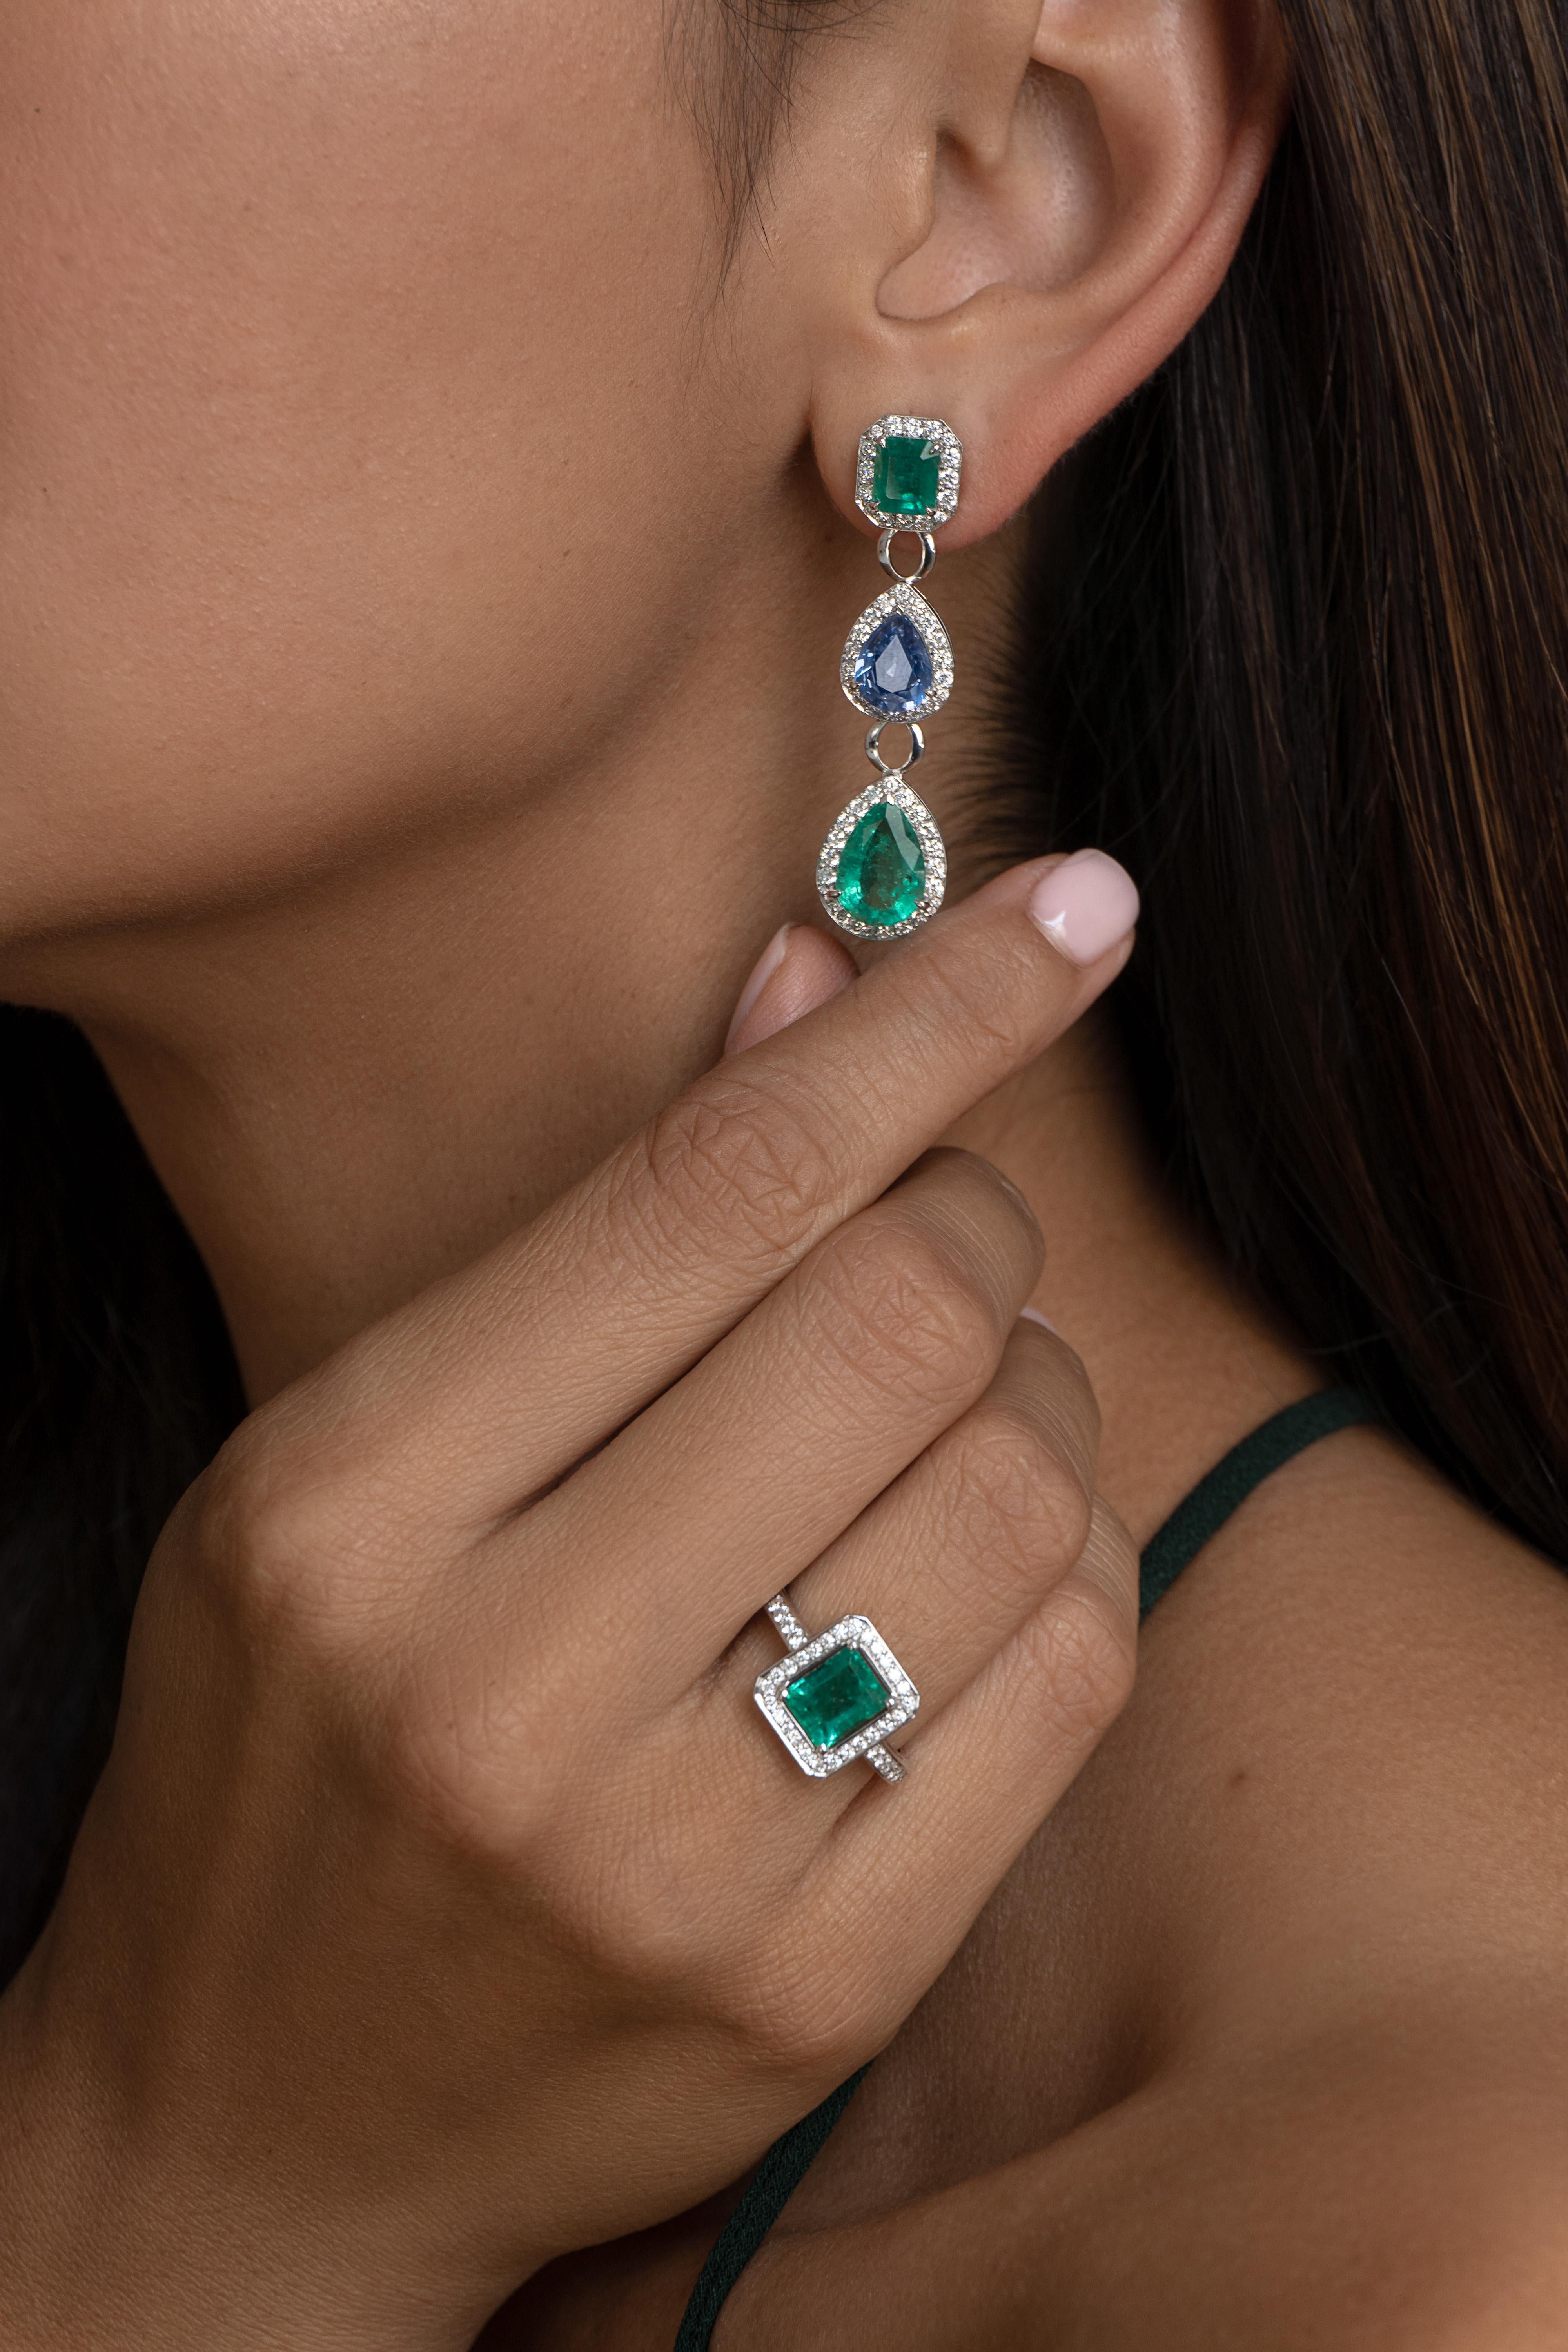 Emerald Cut 5.4 Carat Emerald and 3.93 Carat Blue Sapphire Diamond Earrings in 18 White Gold